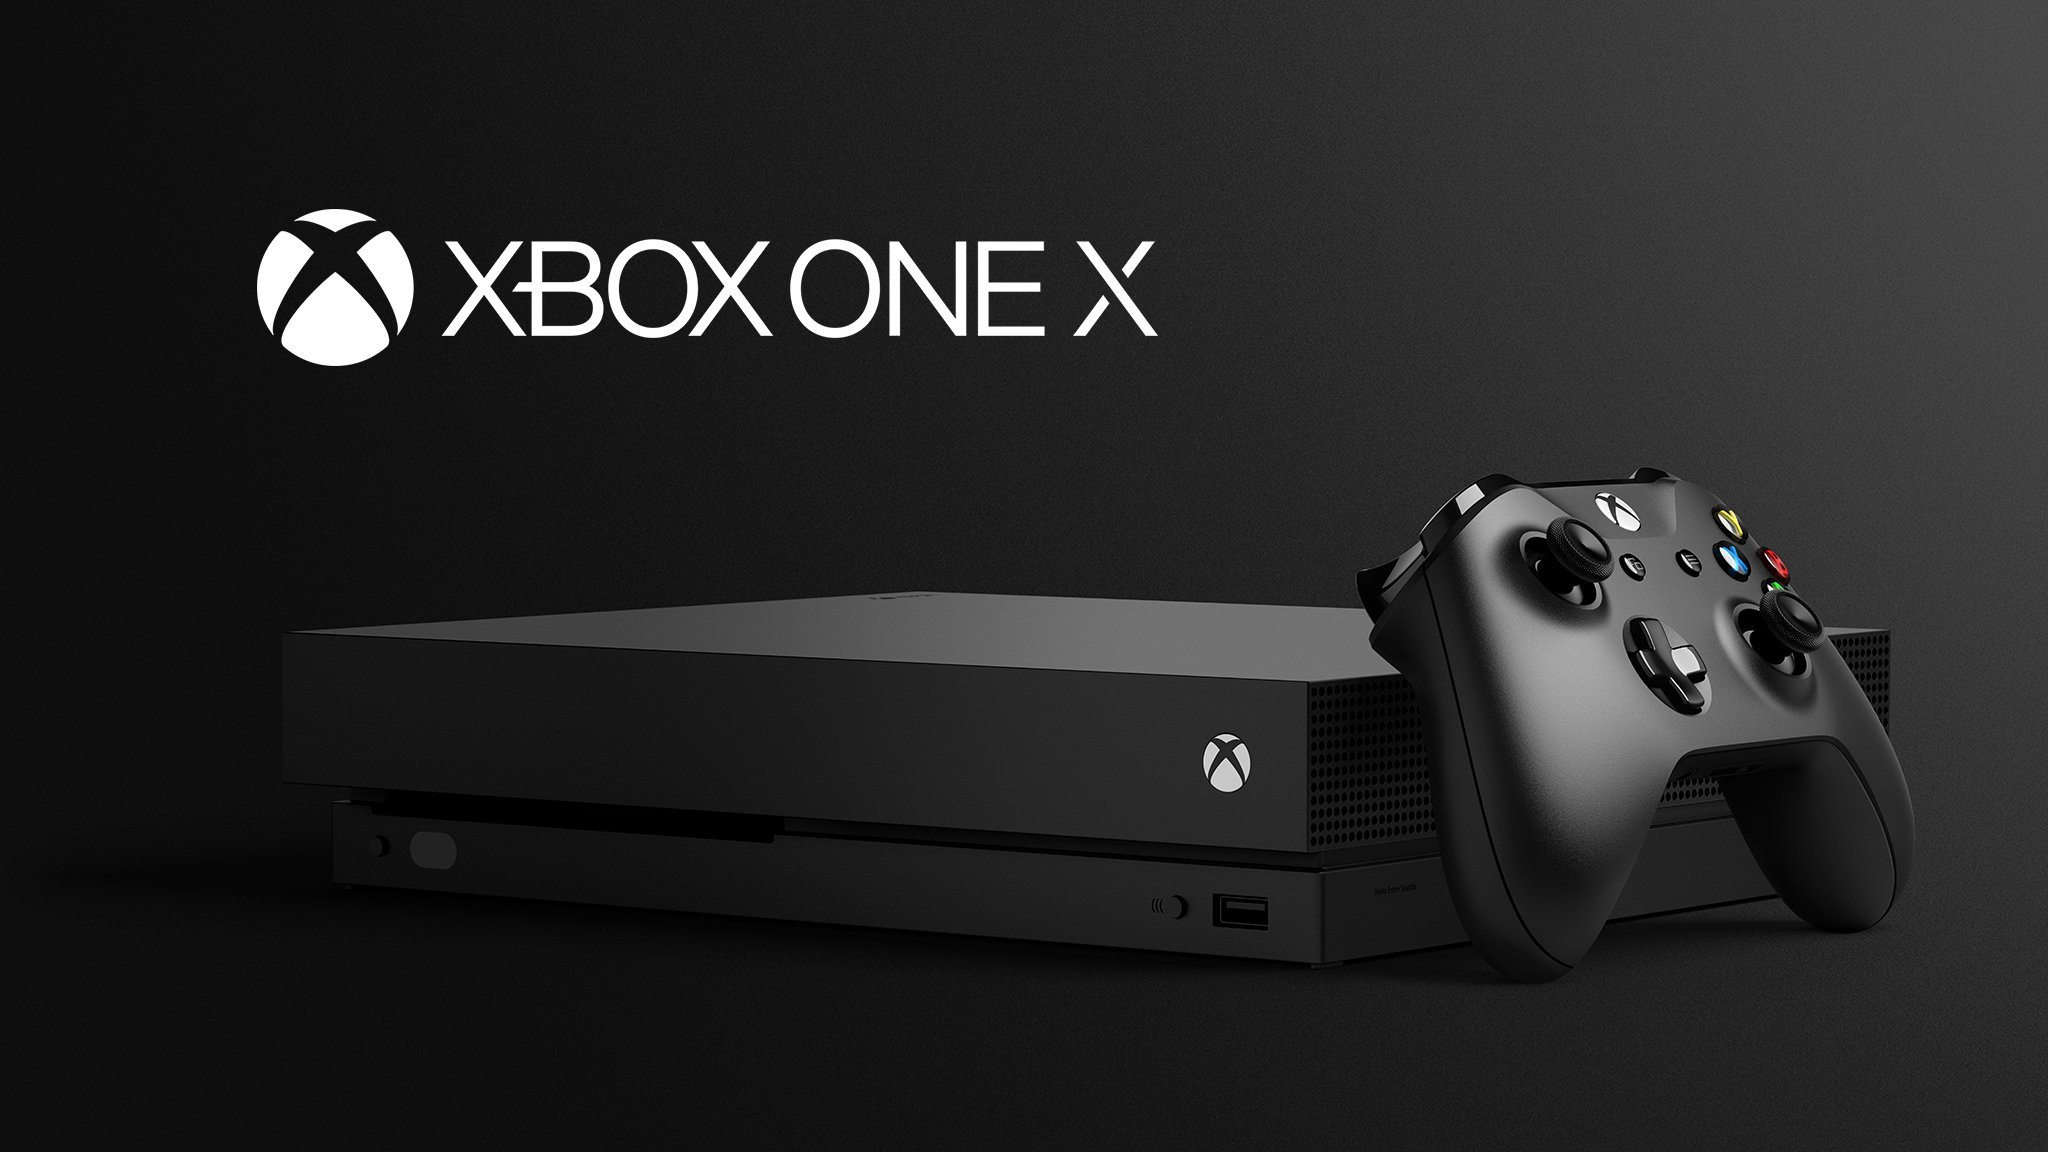 Project Scorpio agora se chama Xbox One X e trouxe novidades para a conferência.